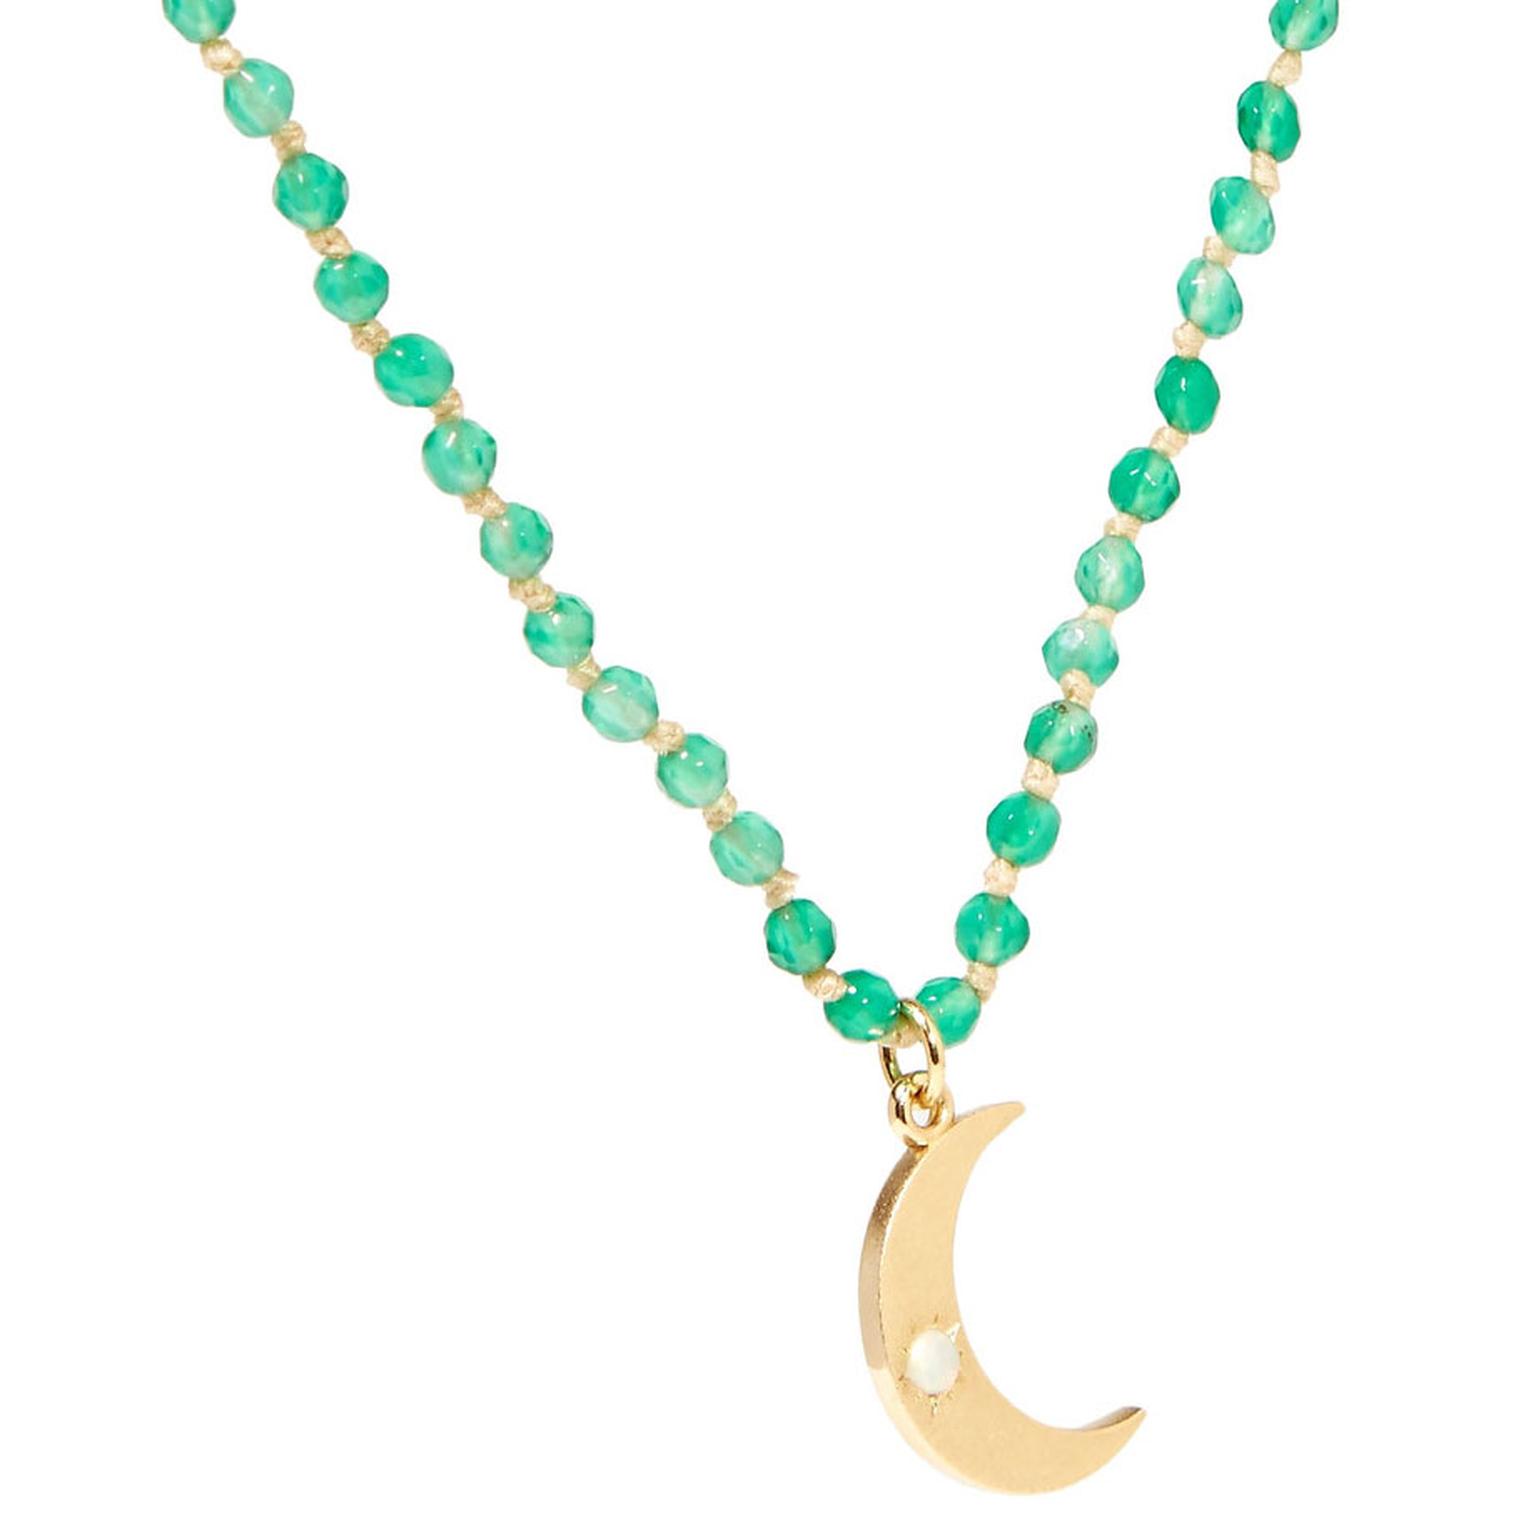 Andrea Fohrman Crescent Moon onyx and opal necklace pendant close up